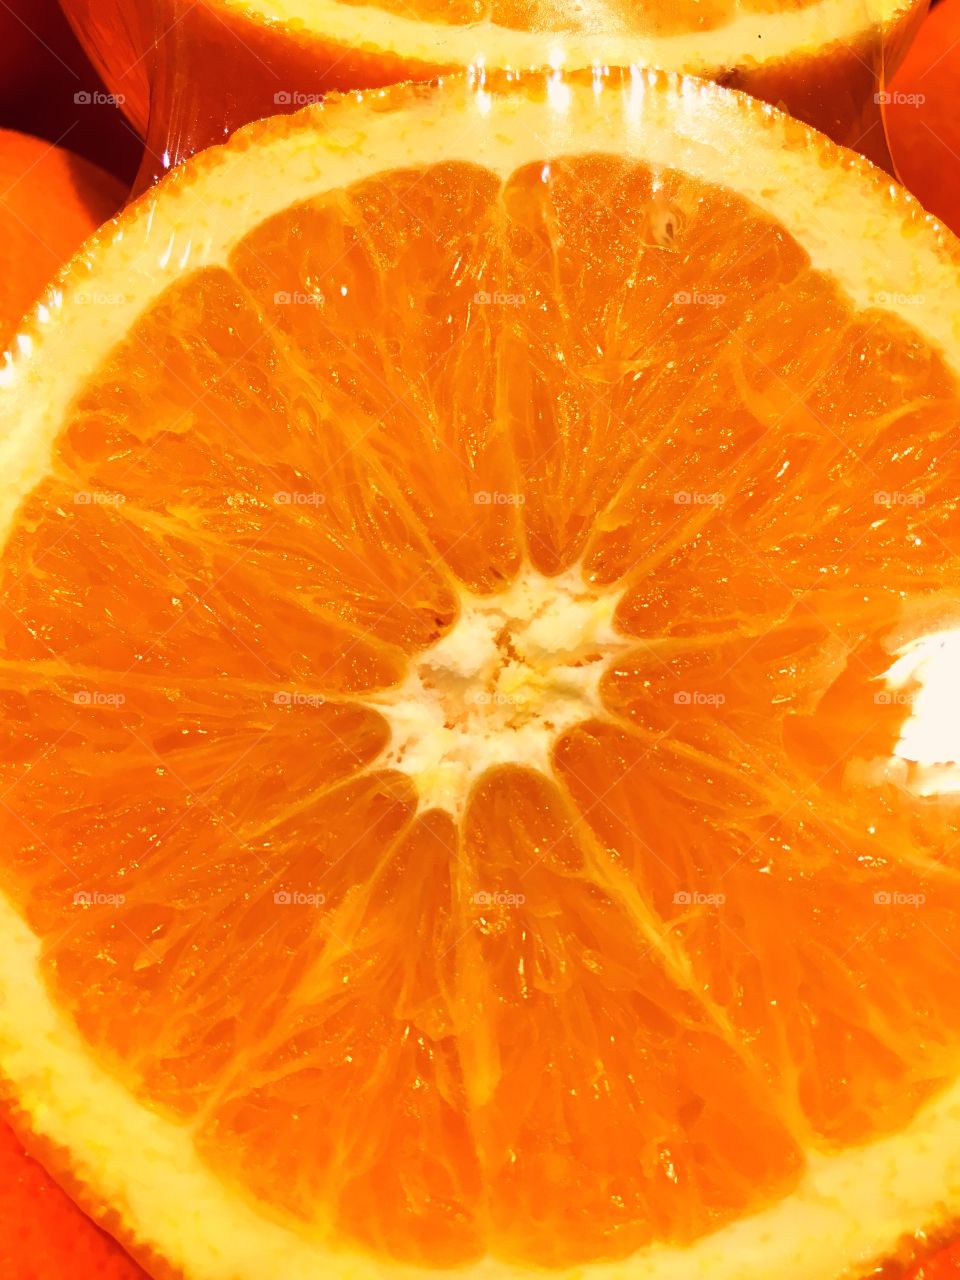 Healthy fruit and very fresh, Very fresh, must be orange.